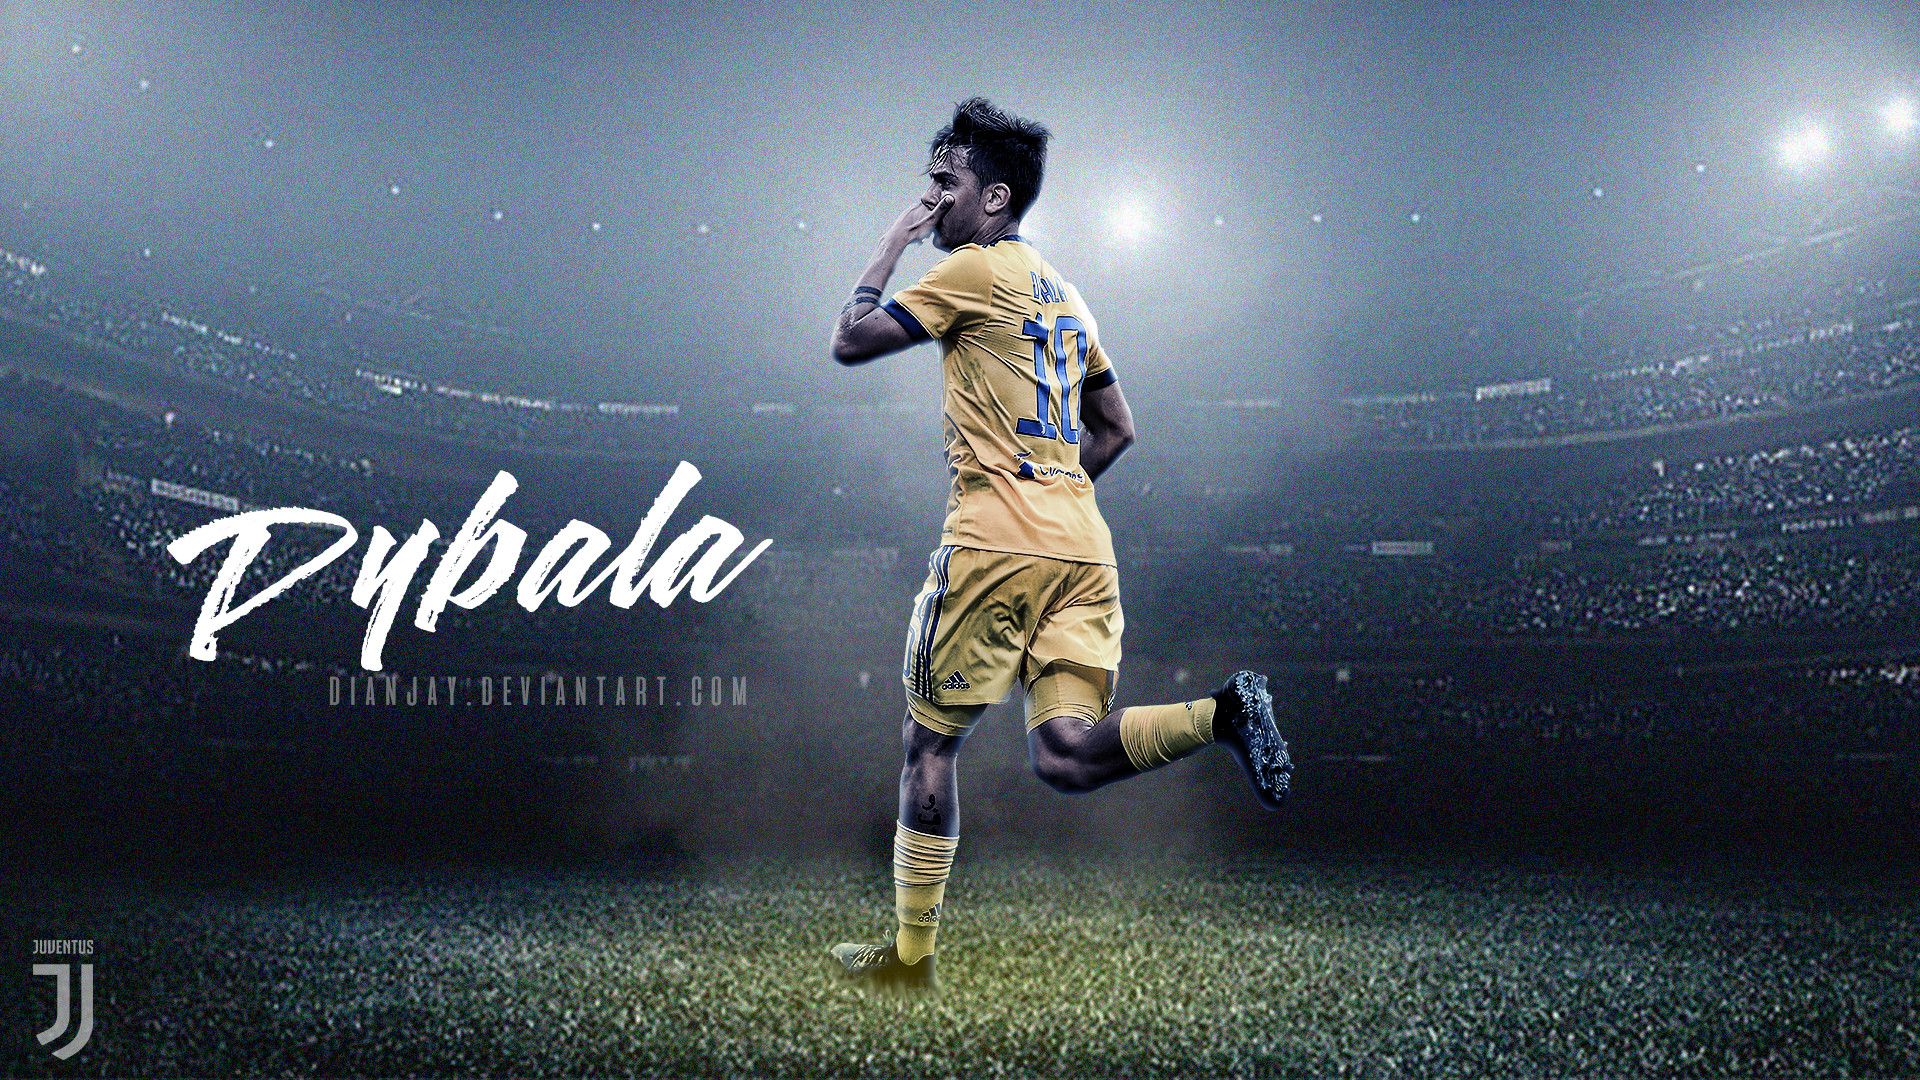 1920x1080 ... Paulo Dybala Juventus Wallpaper Desktop by dianjay